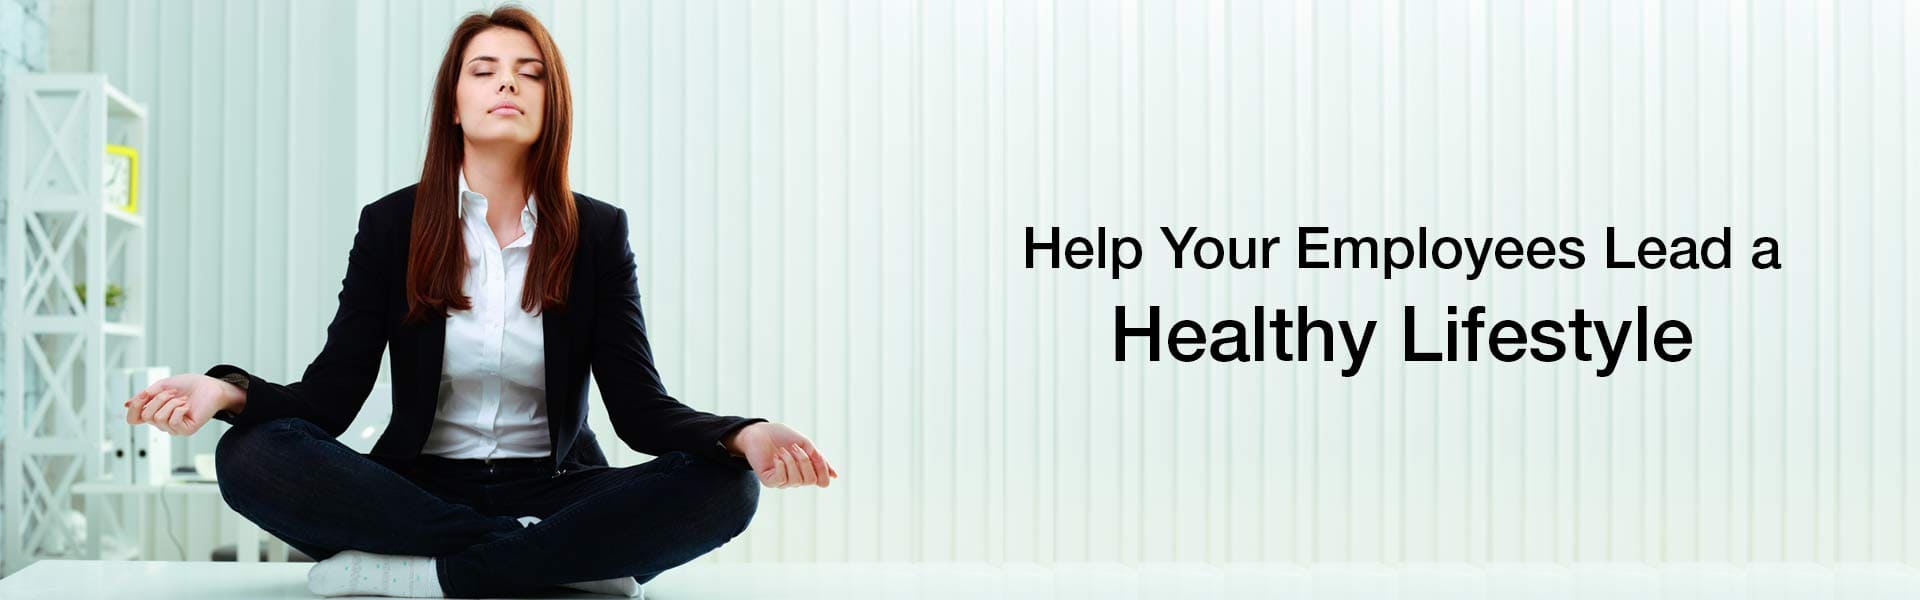 Employee Health and Wellness